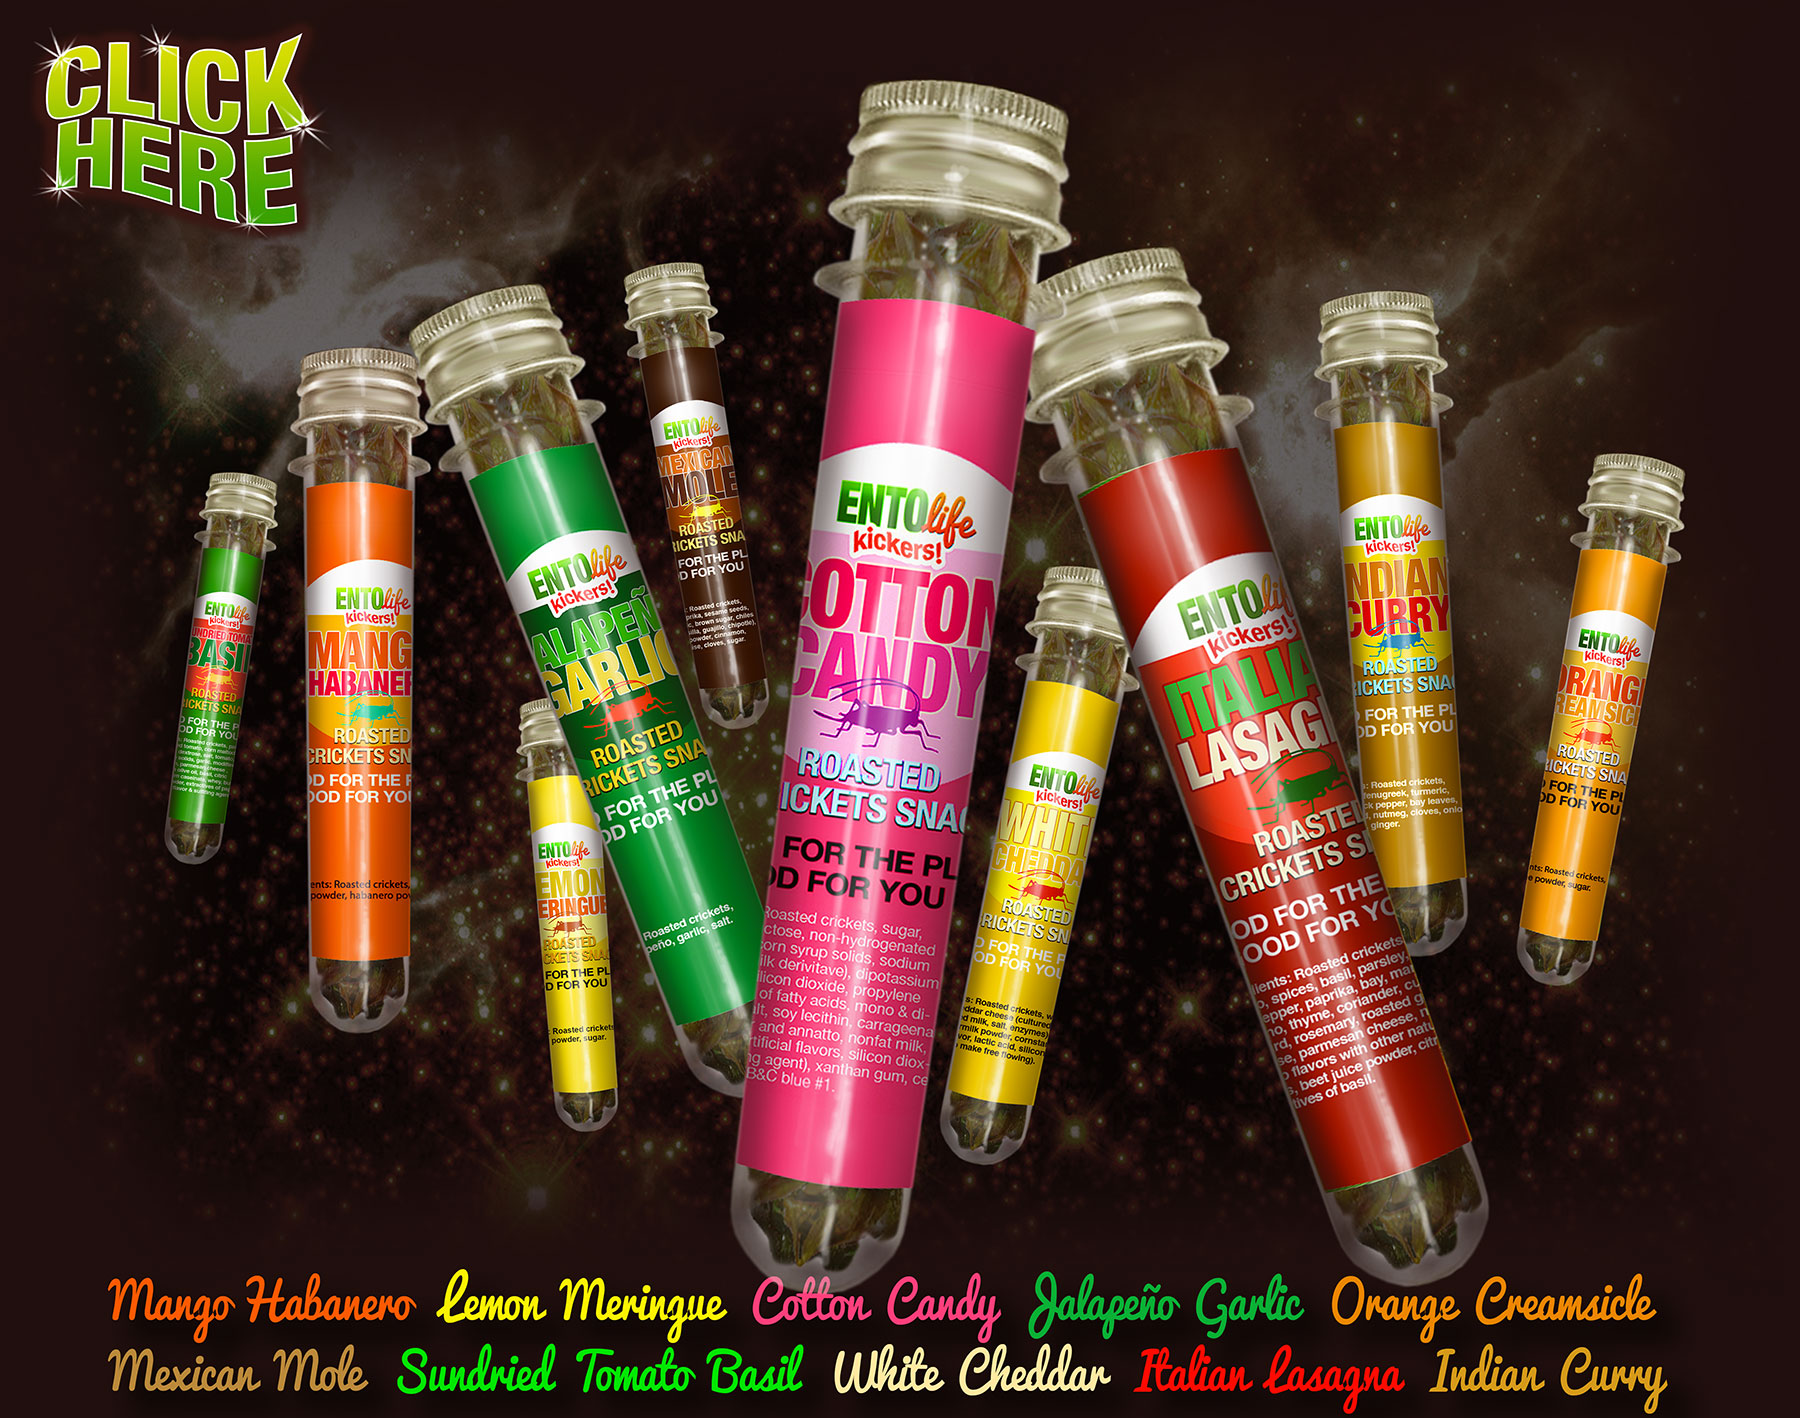 Mini-Kickers Flavored Cricket Snacks | Edible Crickets in 10 Flavors